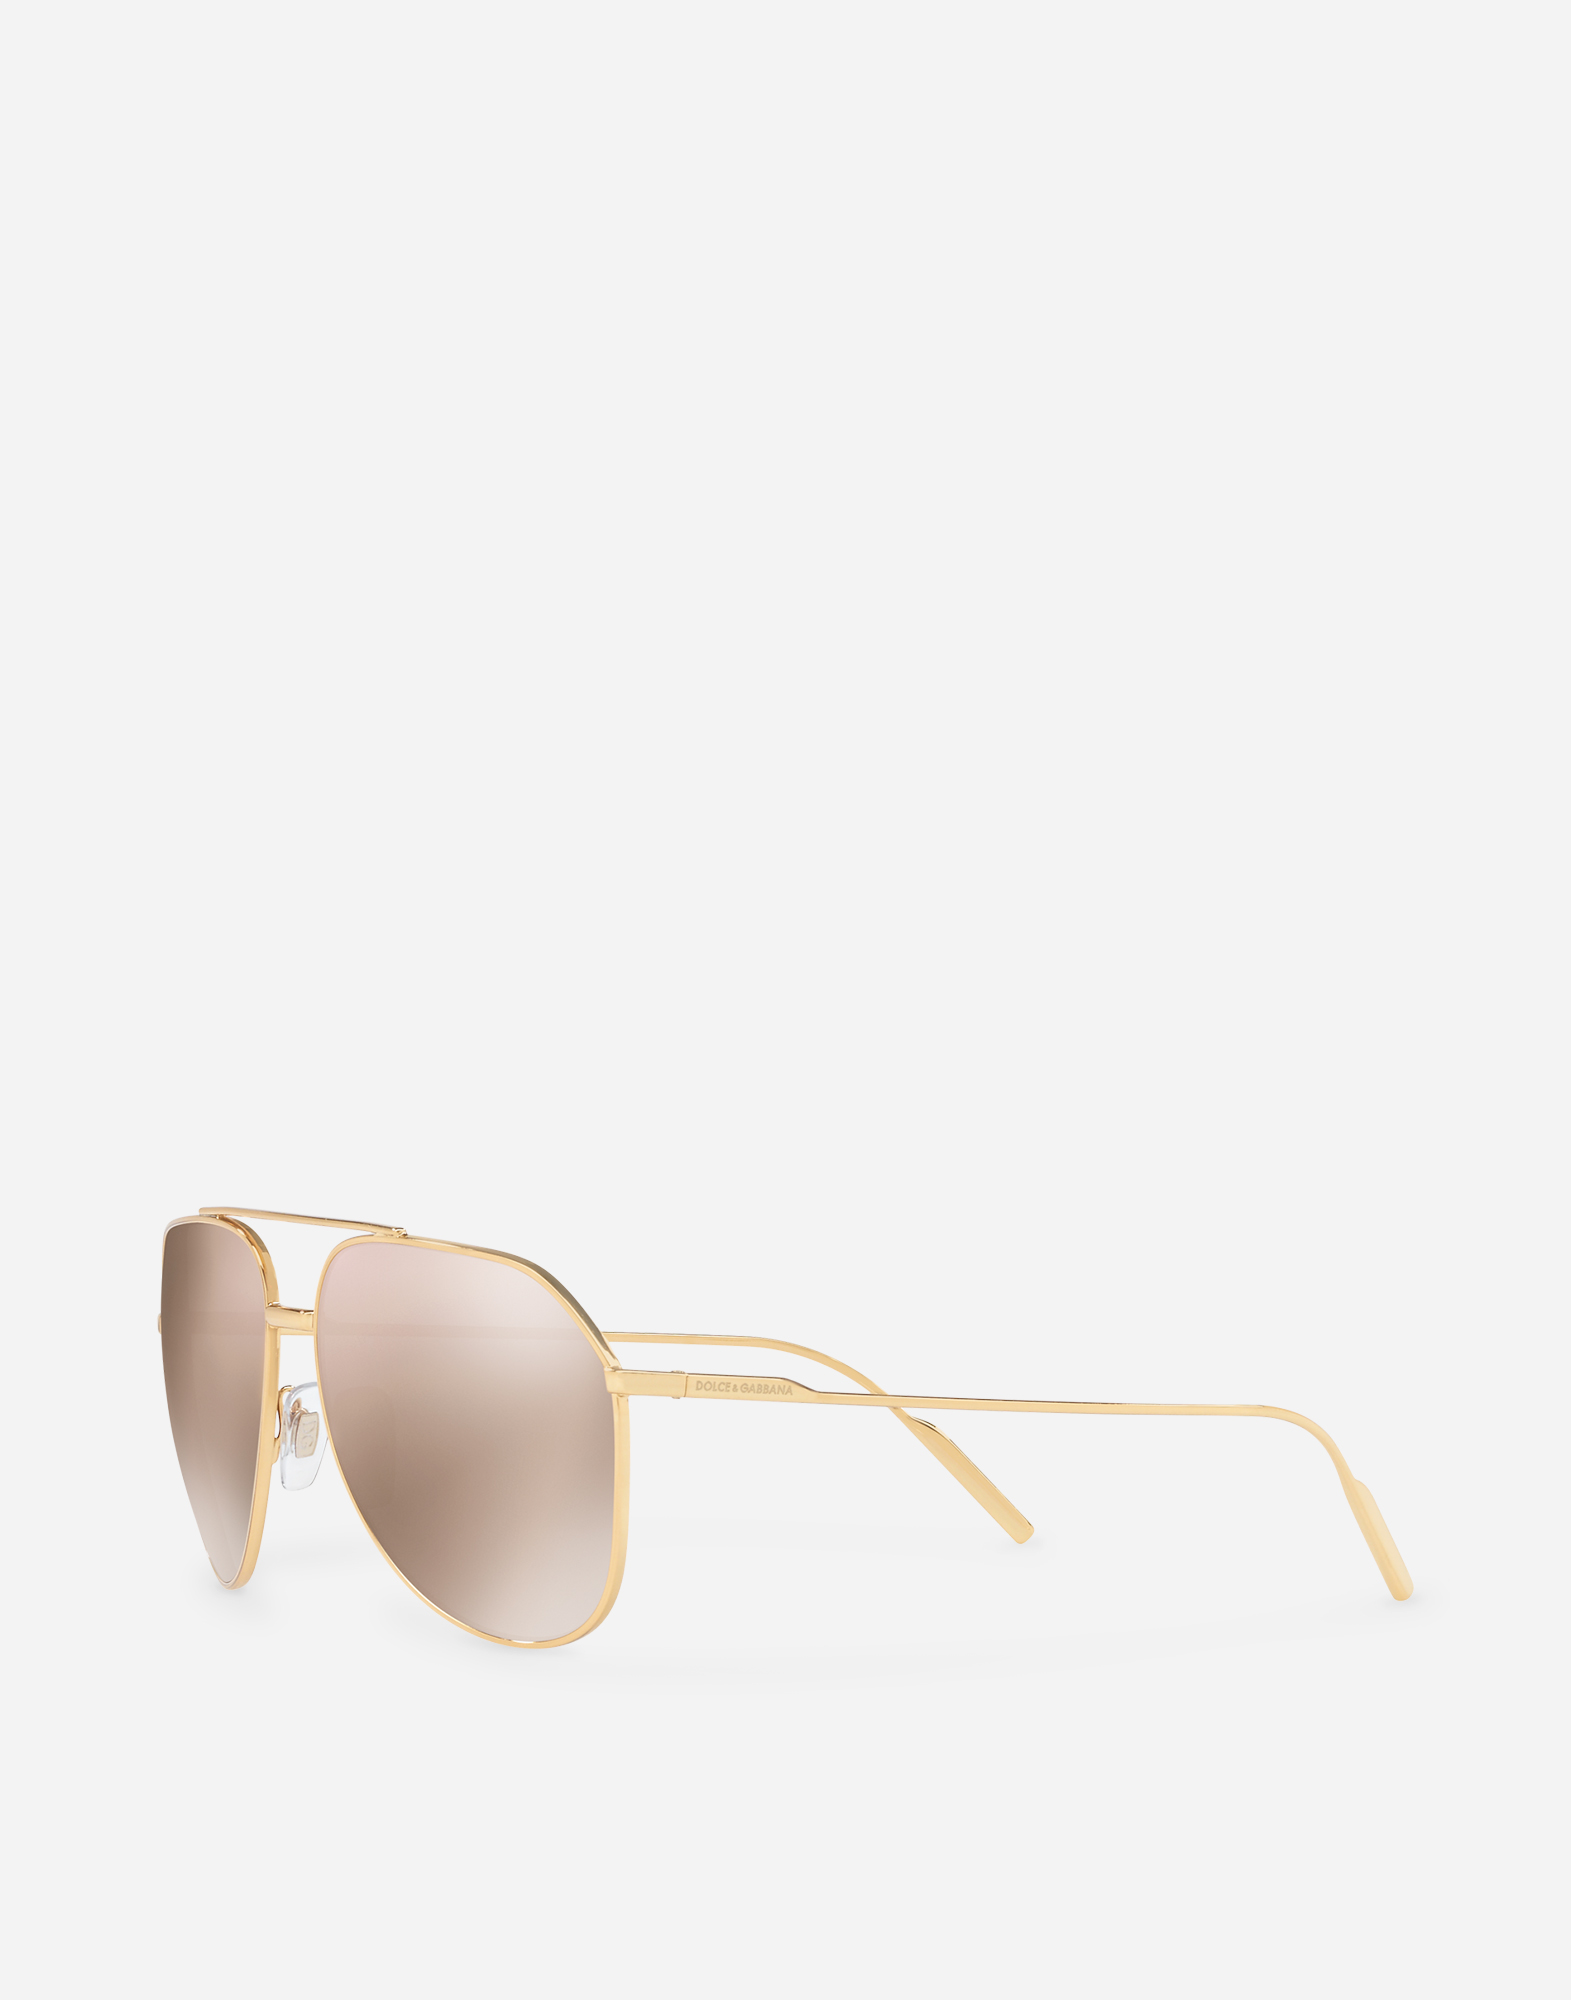 dolce and gabbana gold edition sunglasses